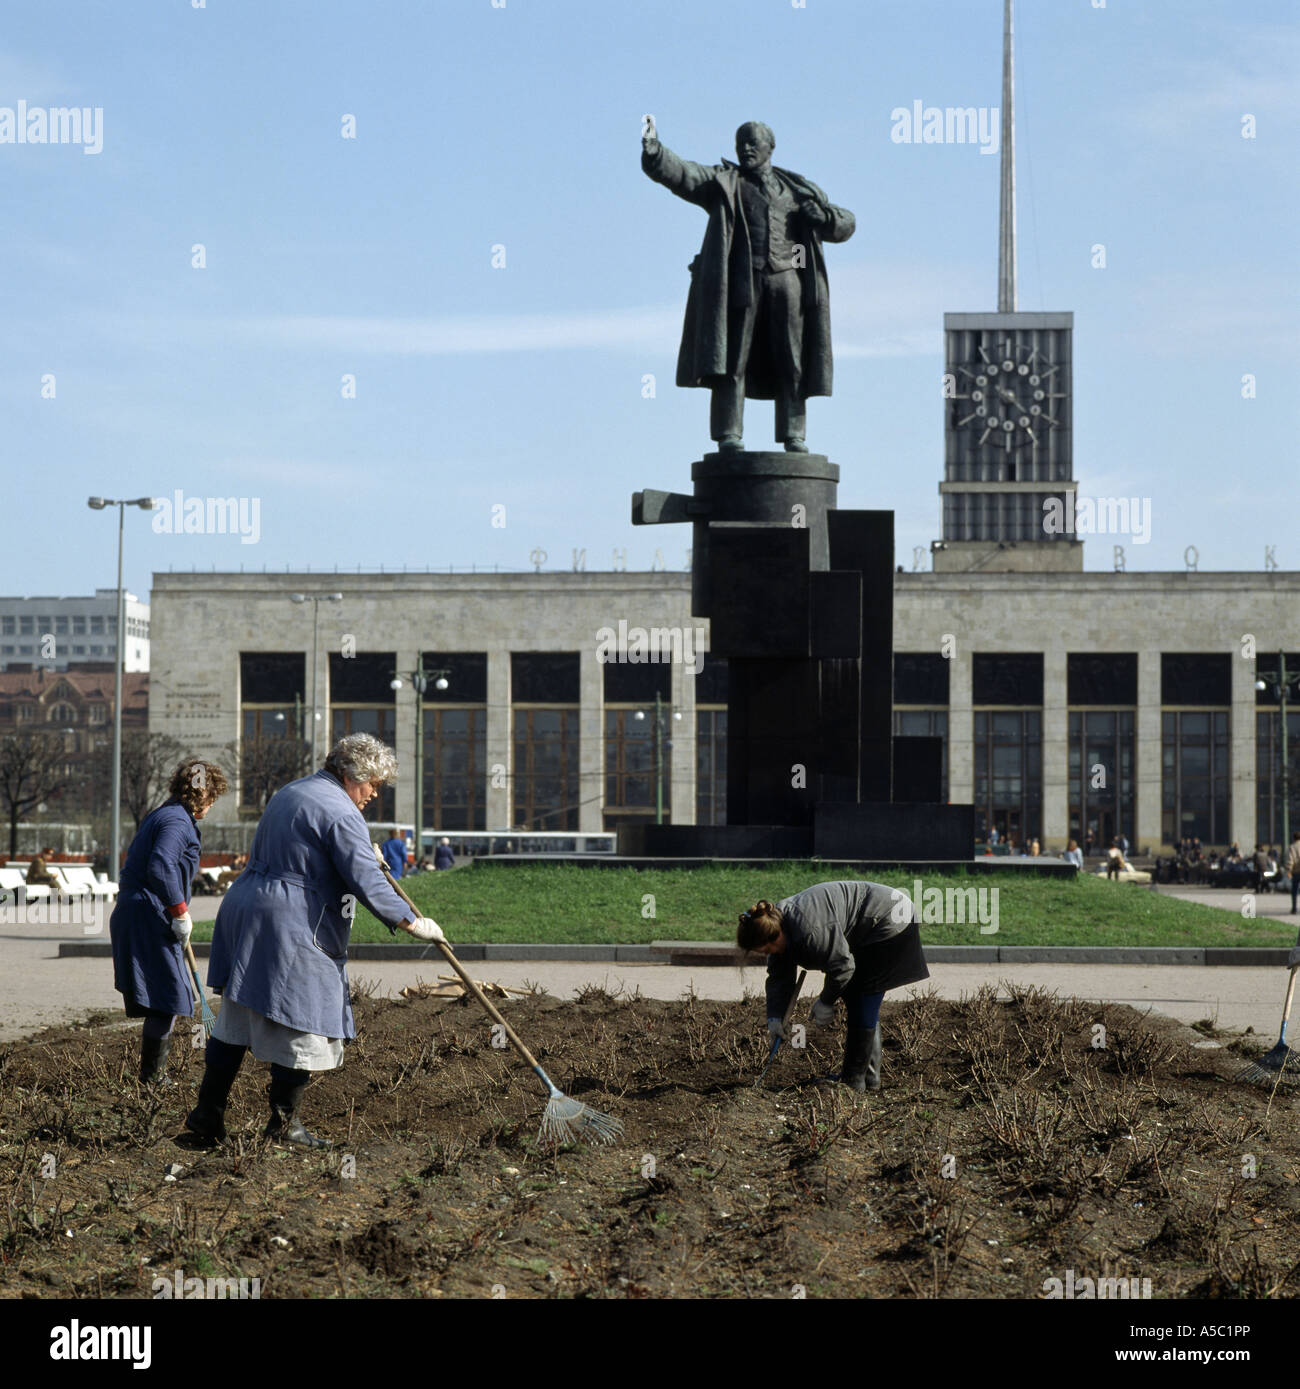 Sankt Petersburg, finnischer Bahnhof, Lenindenkmal Gärtnerinnen mit Banque D'Images